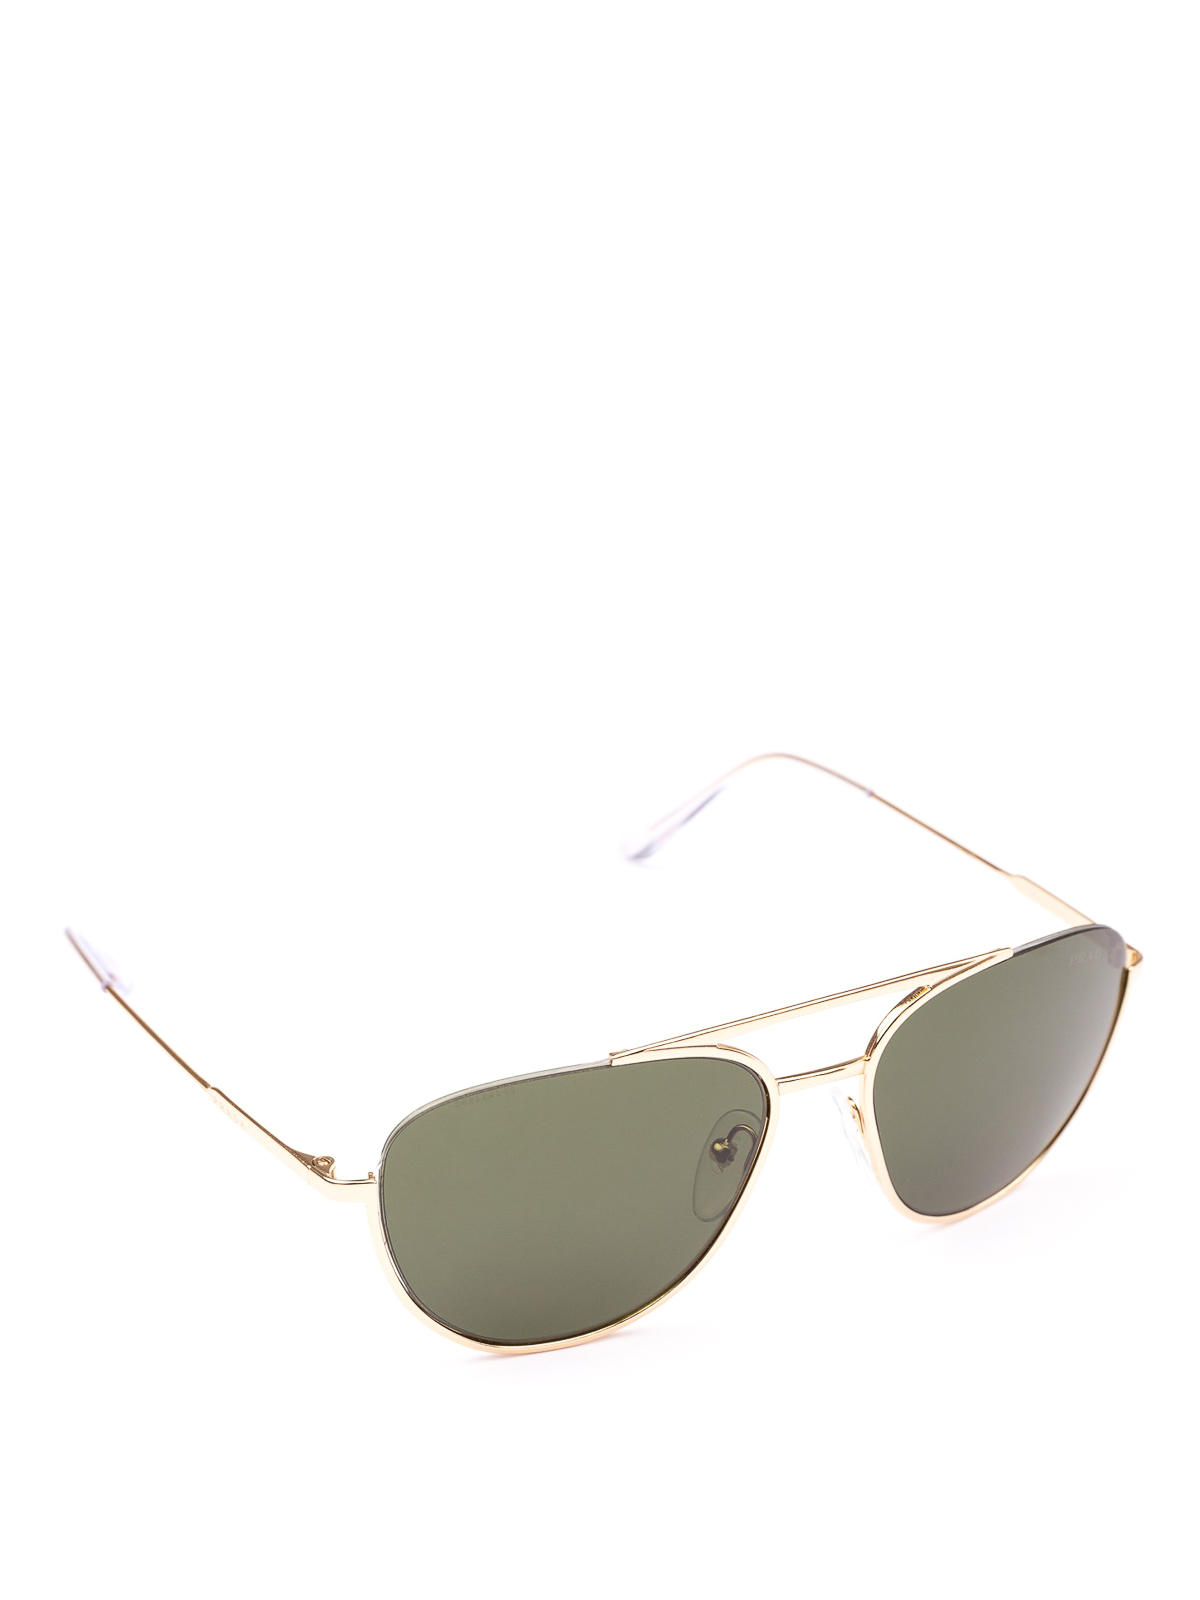 Sunglasses Prada - Pale gold metal aviator sunglasses - SPR50U5AK1I0